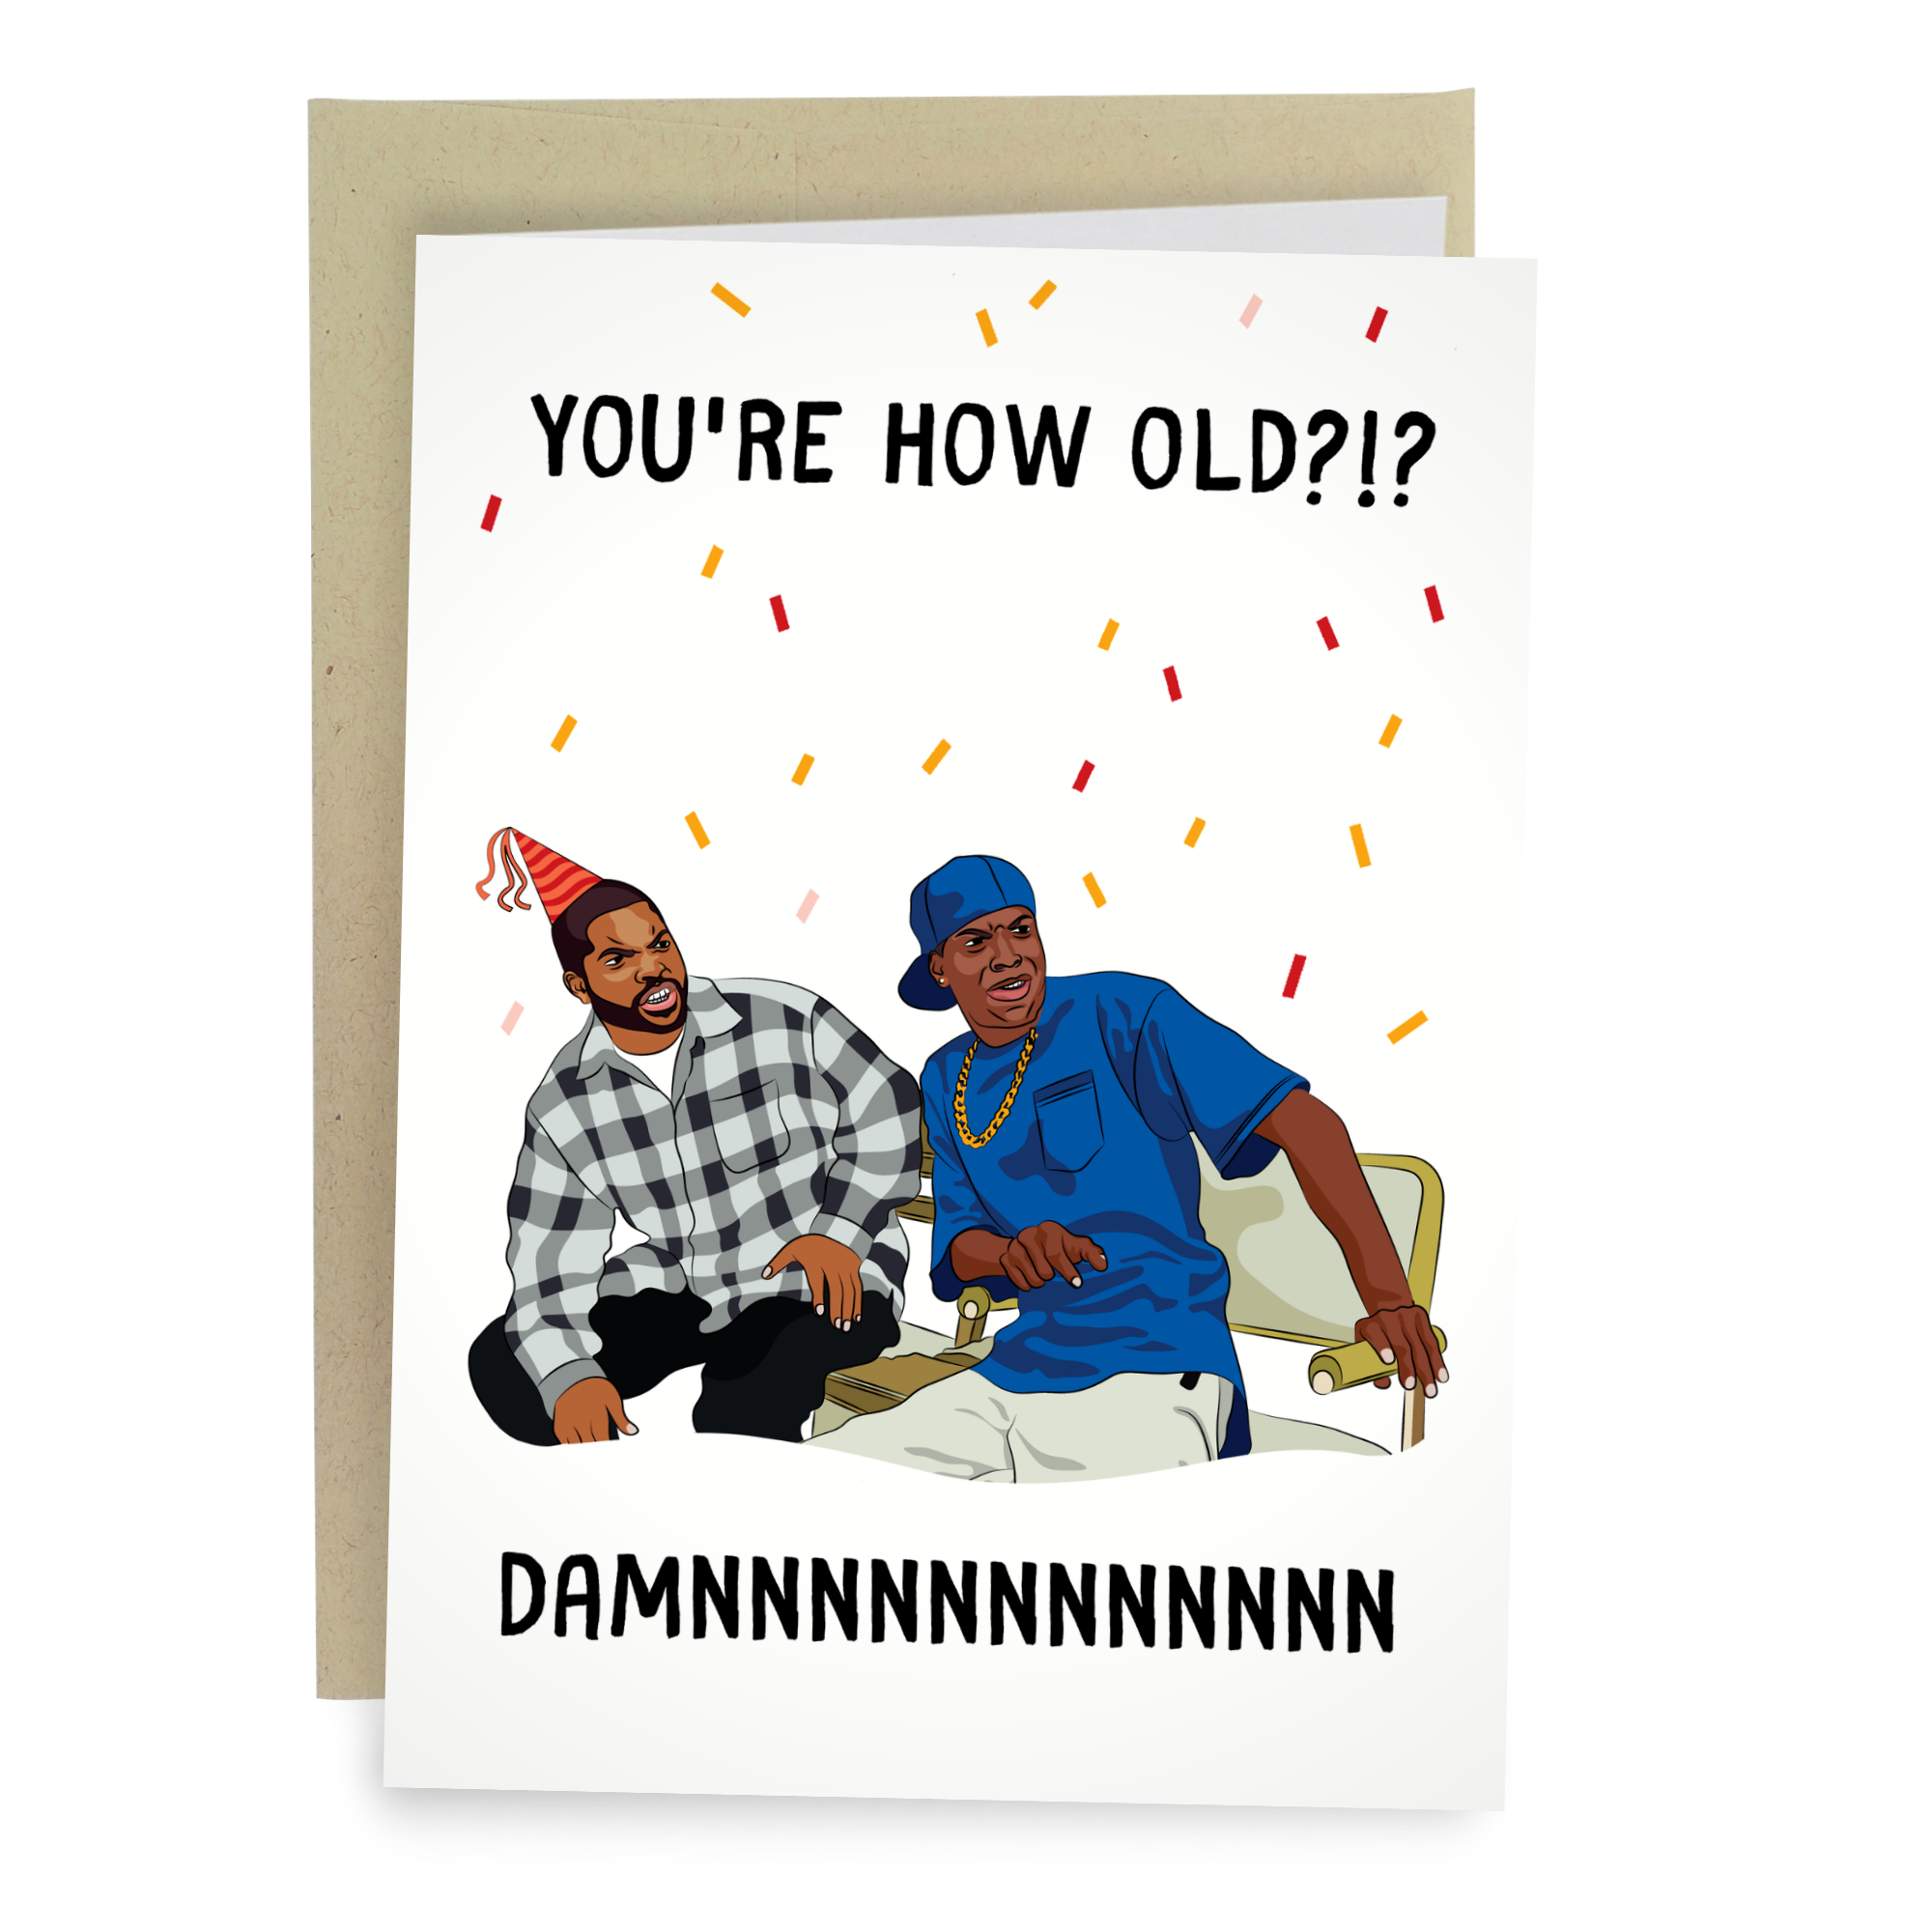 funny happy birthday cards for men